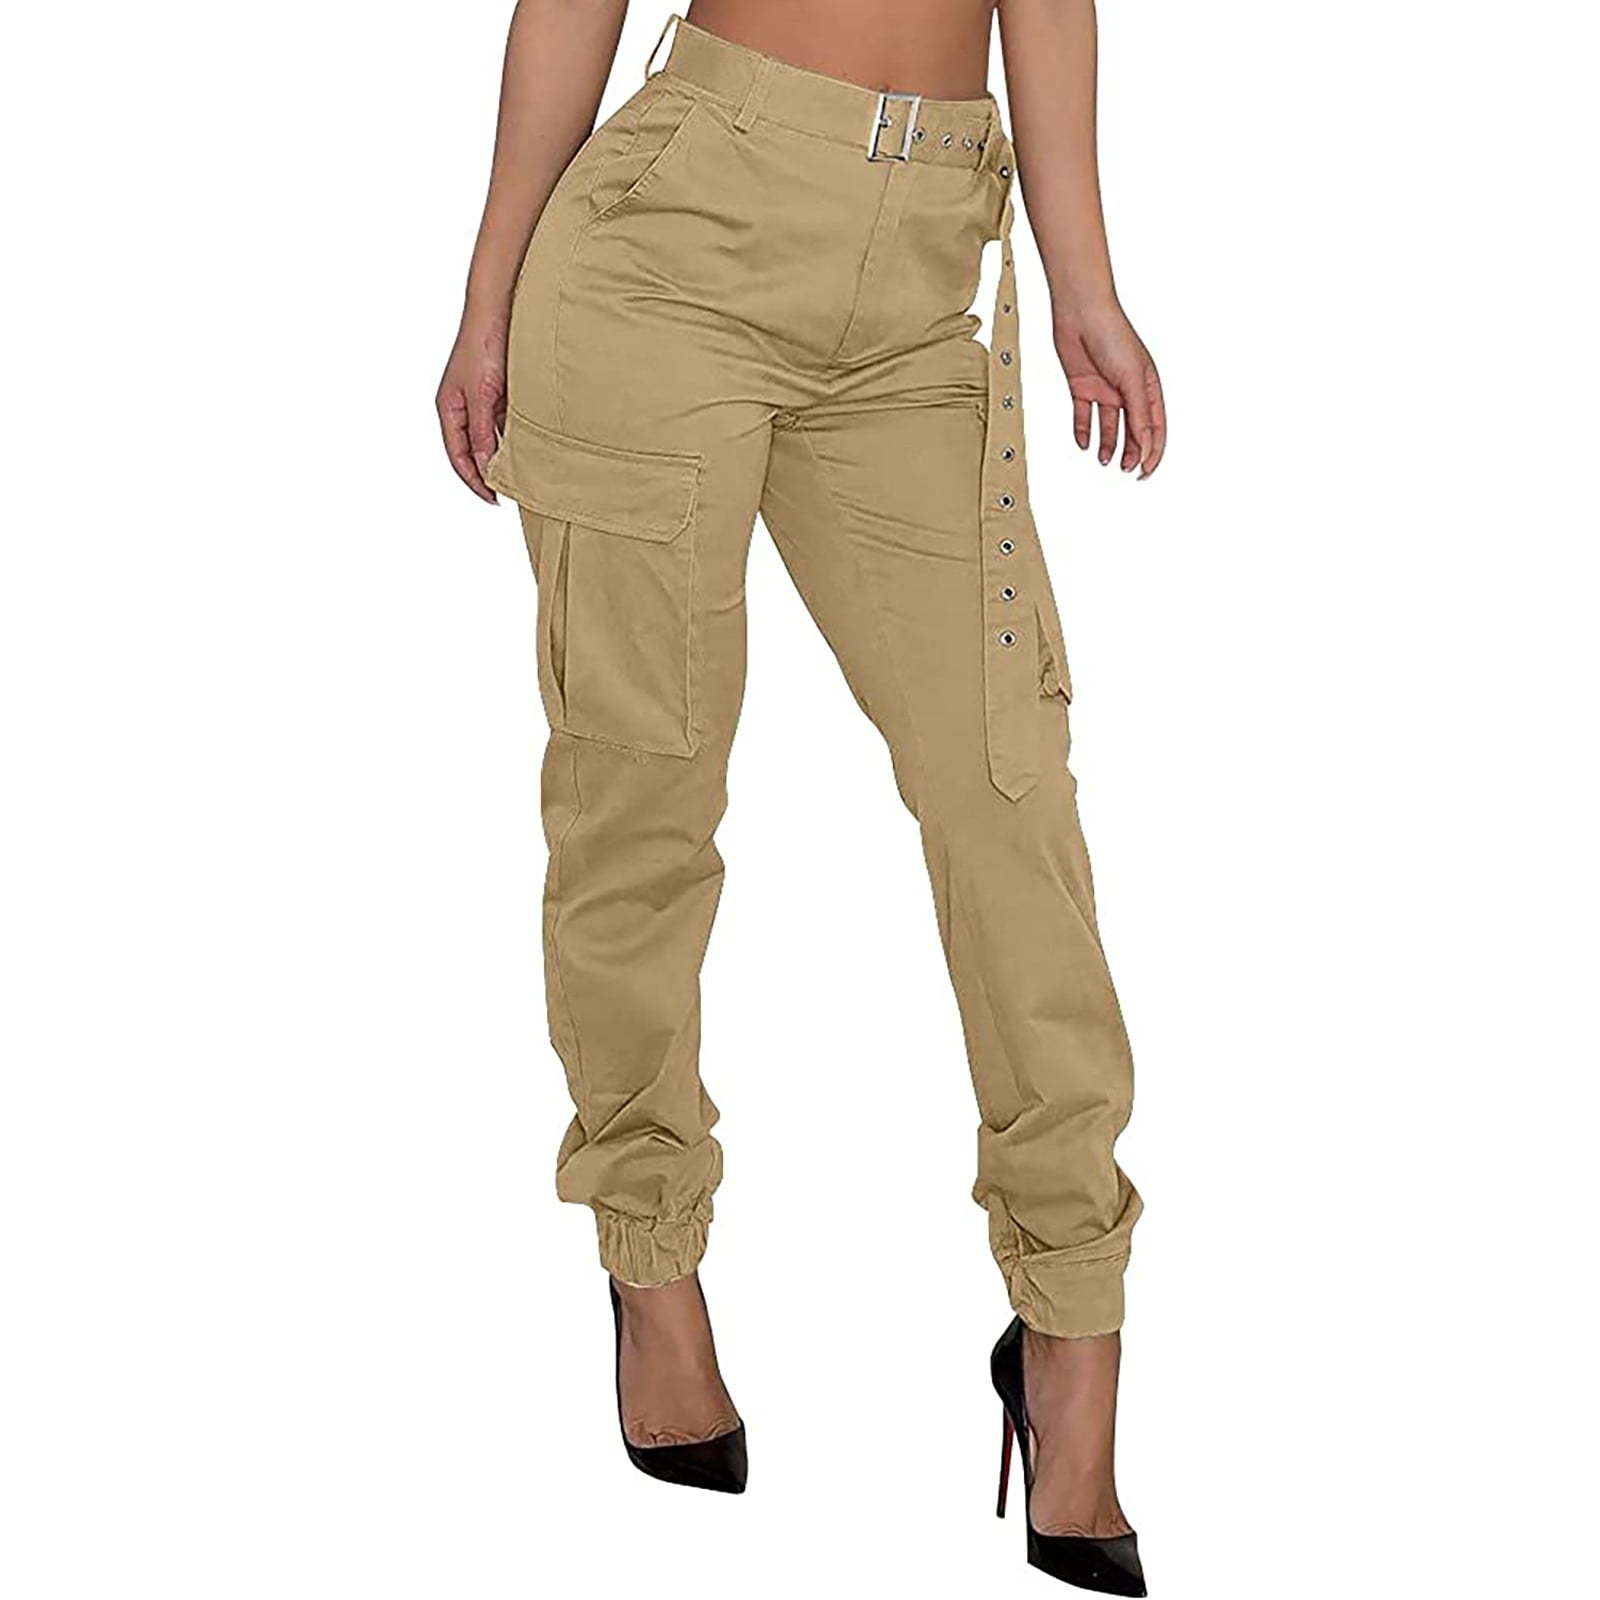 HSMQHJWE Polyester Pants Women Women'S Casual Pants Size 16 Women